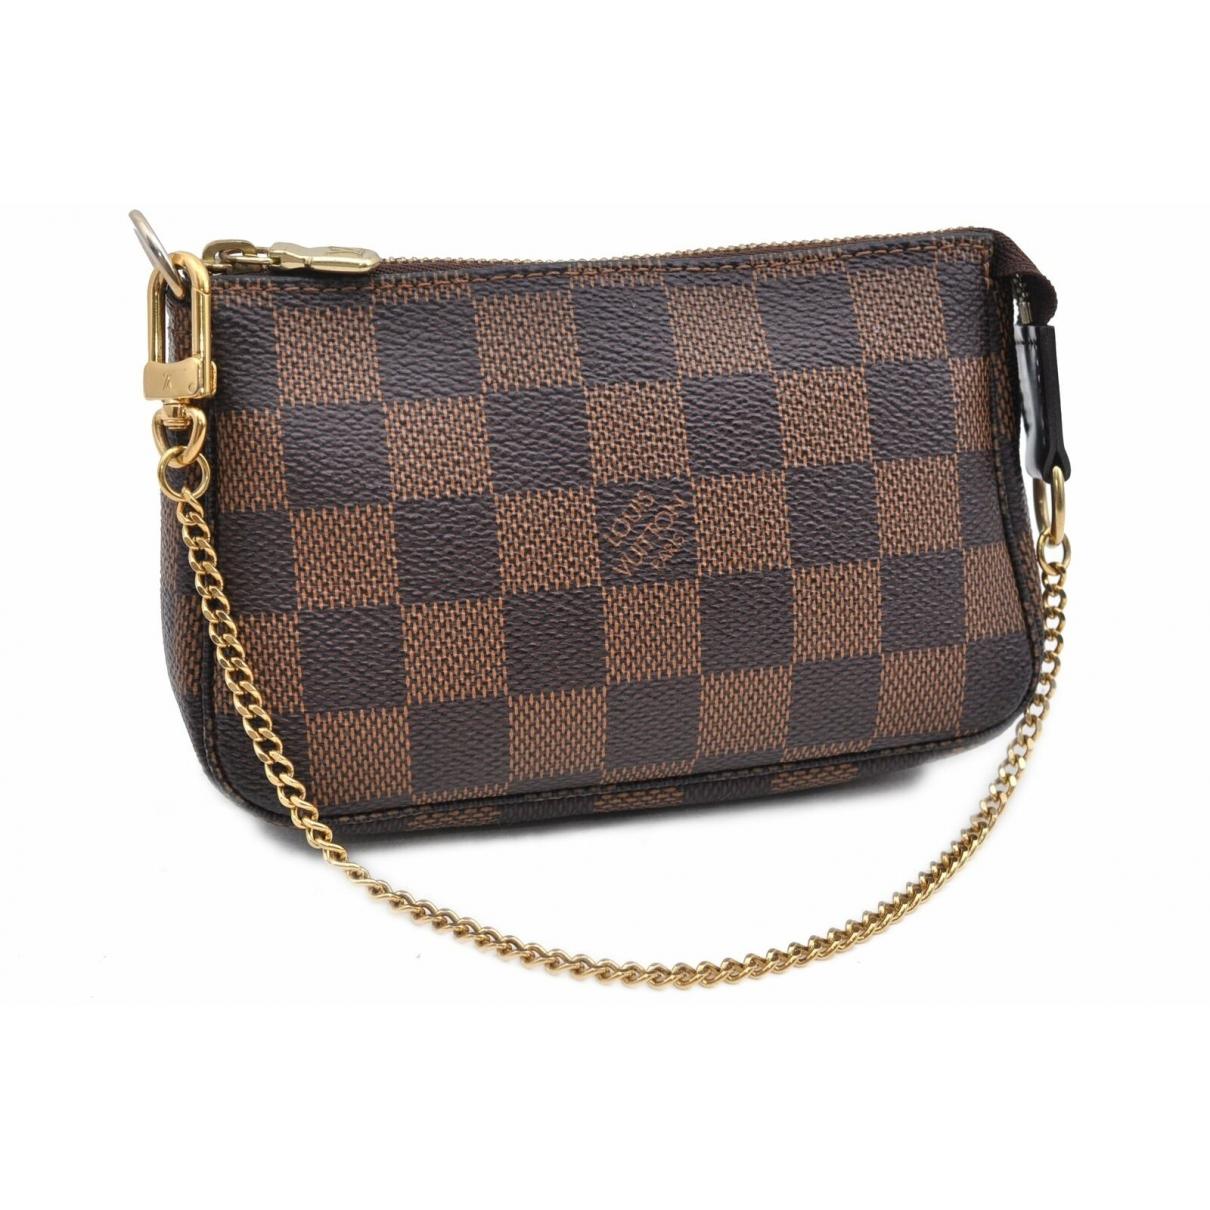 Lyst - Louis Vuitton Pochette Accessoire Cloth Clutch Bag in Brown